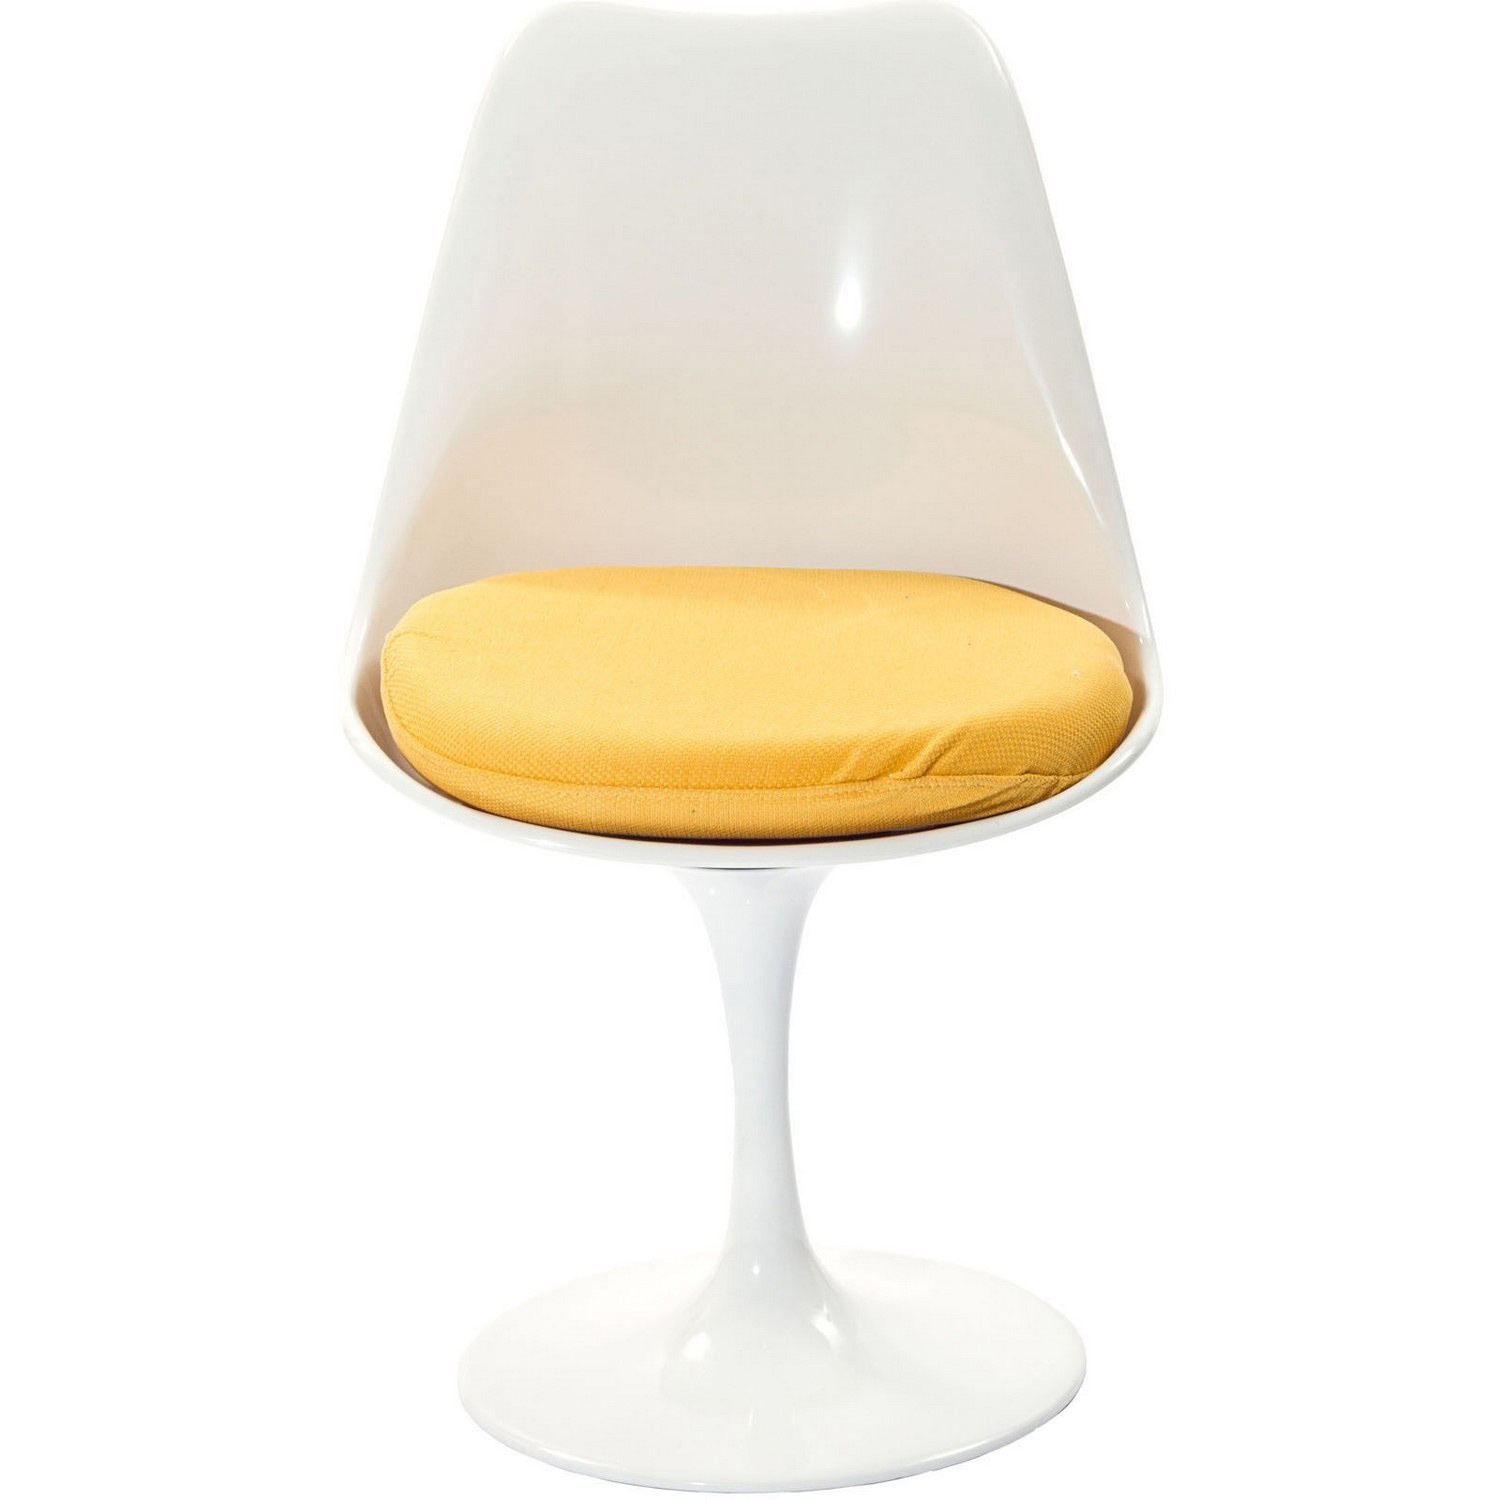 Modway Lippa Dining Side Chair Fabric Set of 4 - Yellow